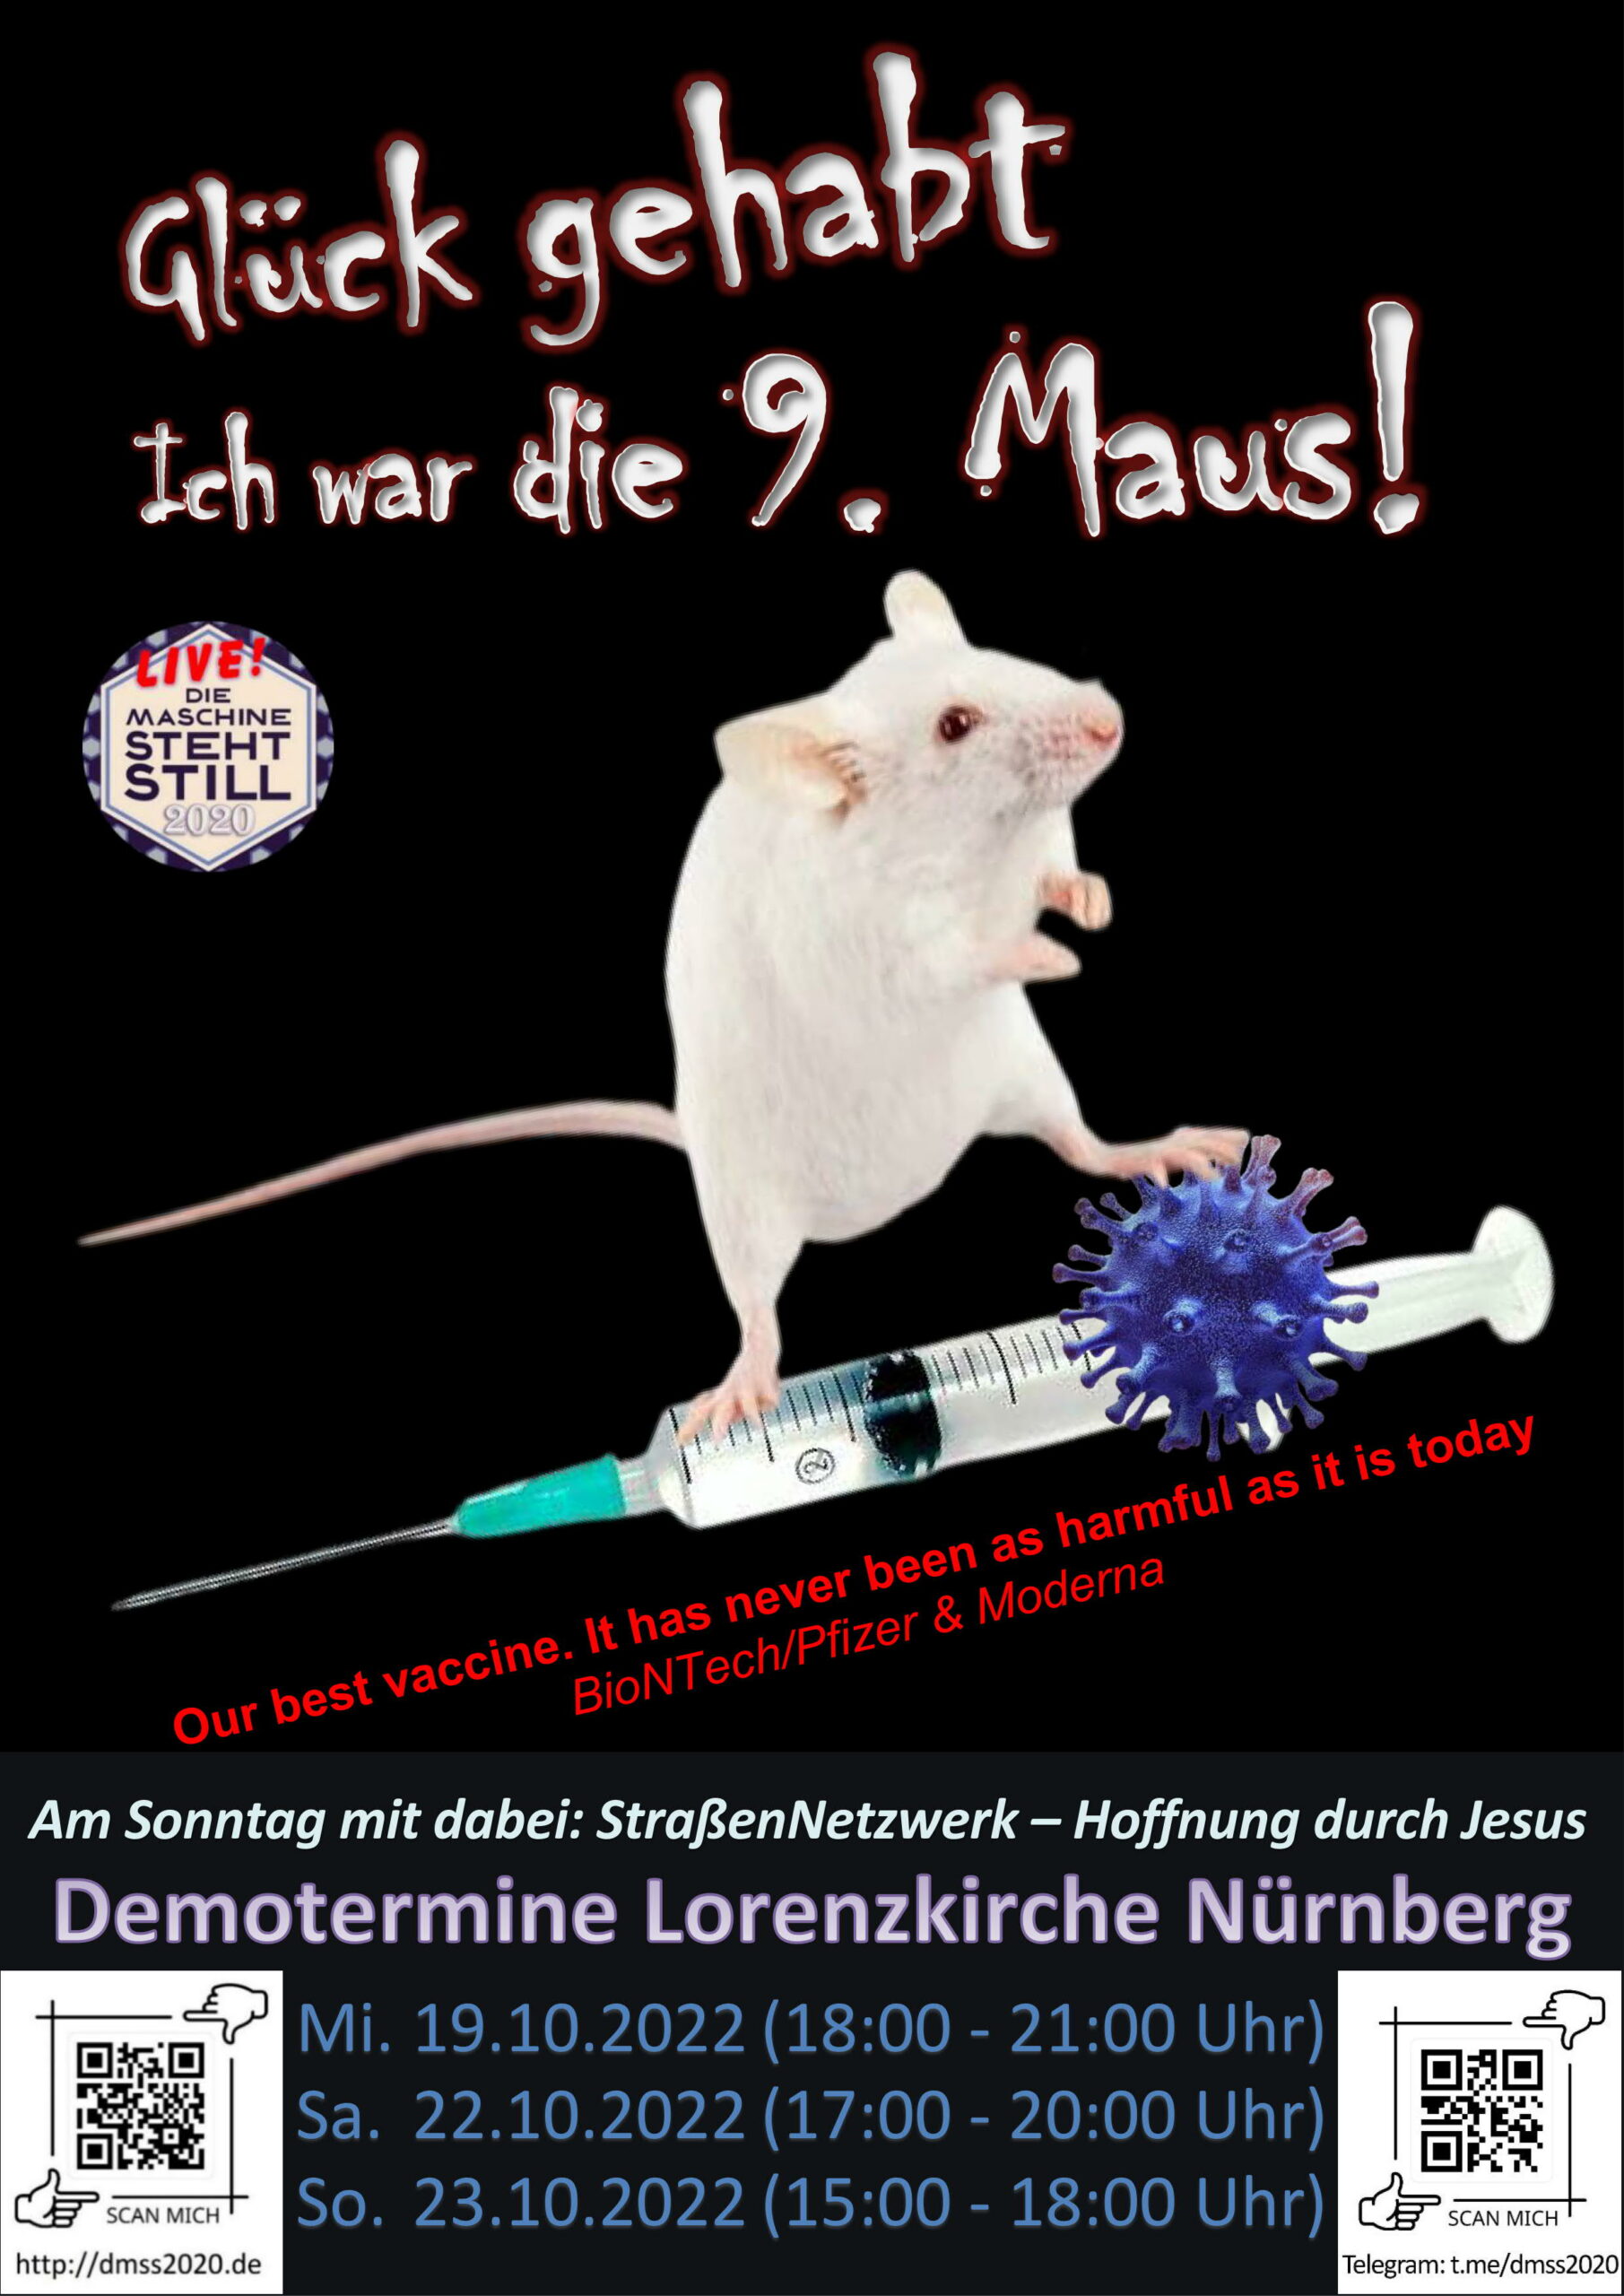 Glück gehabt Ich war die 9. Maus! Our best vaccine. It has never been as harmful as it is today BioNTech/Pfizer & Moderna